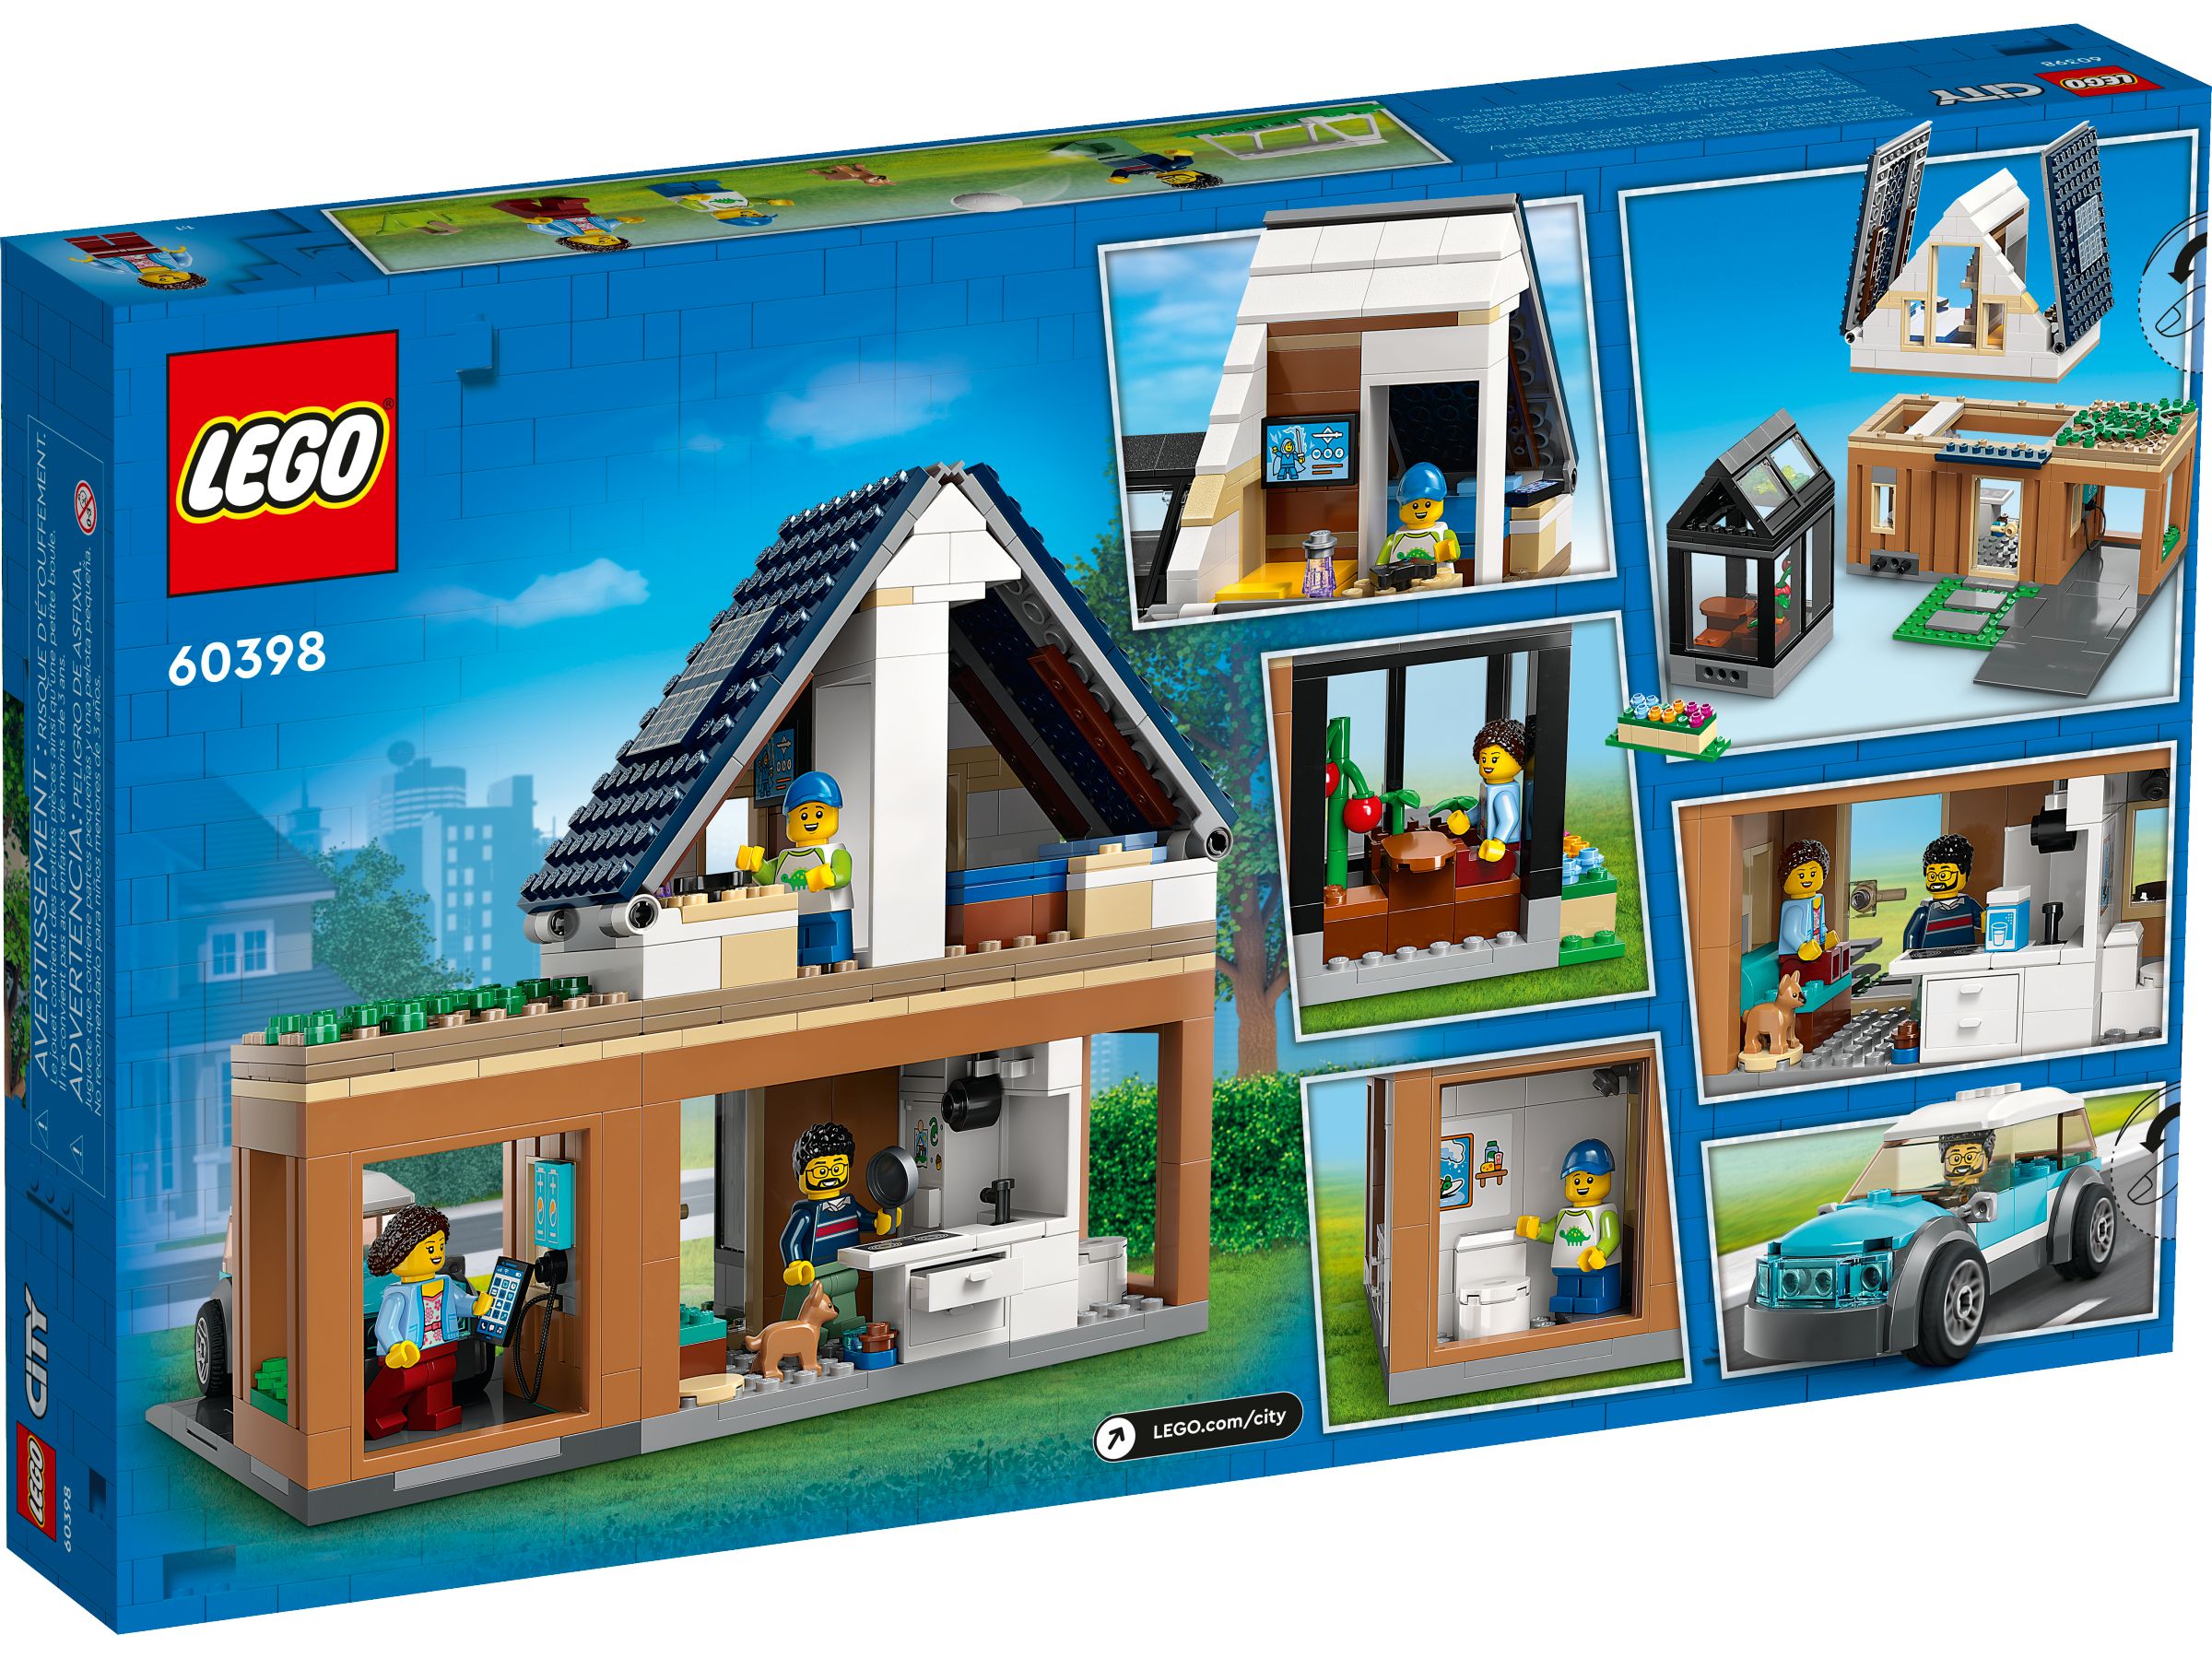 LEGO City 60398 Familienhaus mit Elektroauto LEGO_60398_Box5_v39.jpg